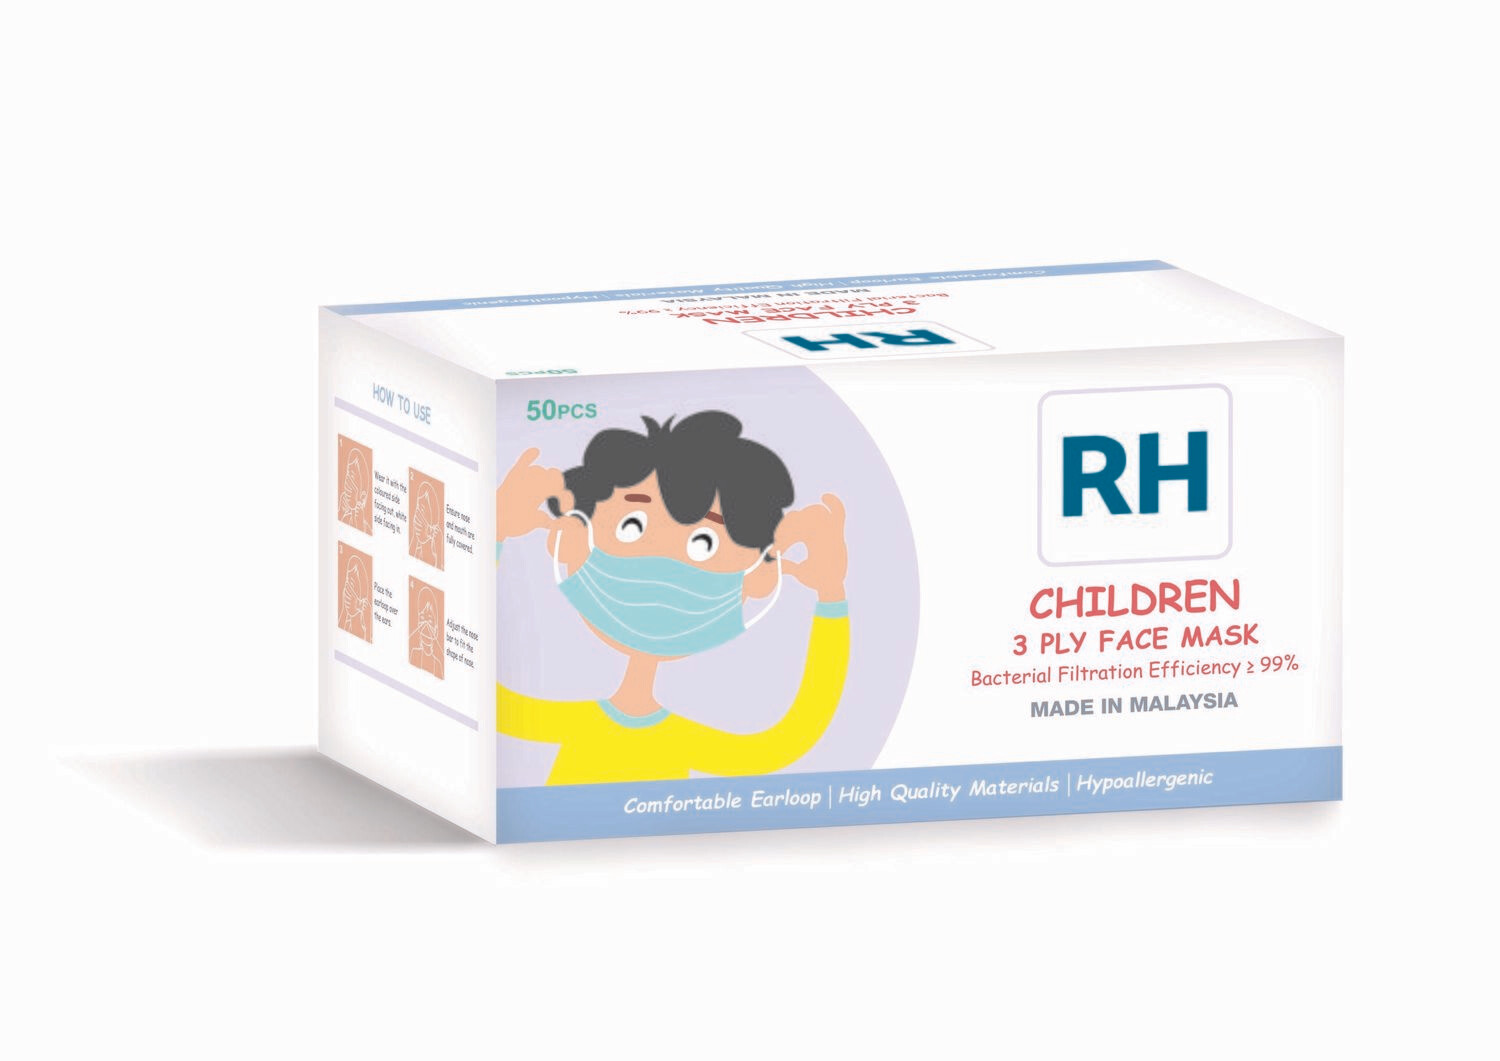 [Rentas Health] 3 PLY Children Face Mask 50pcs per box